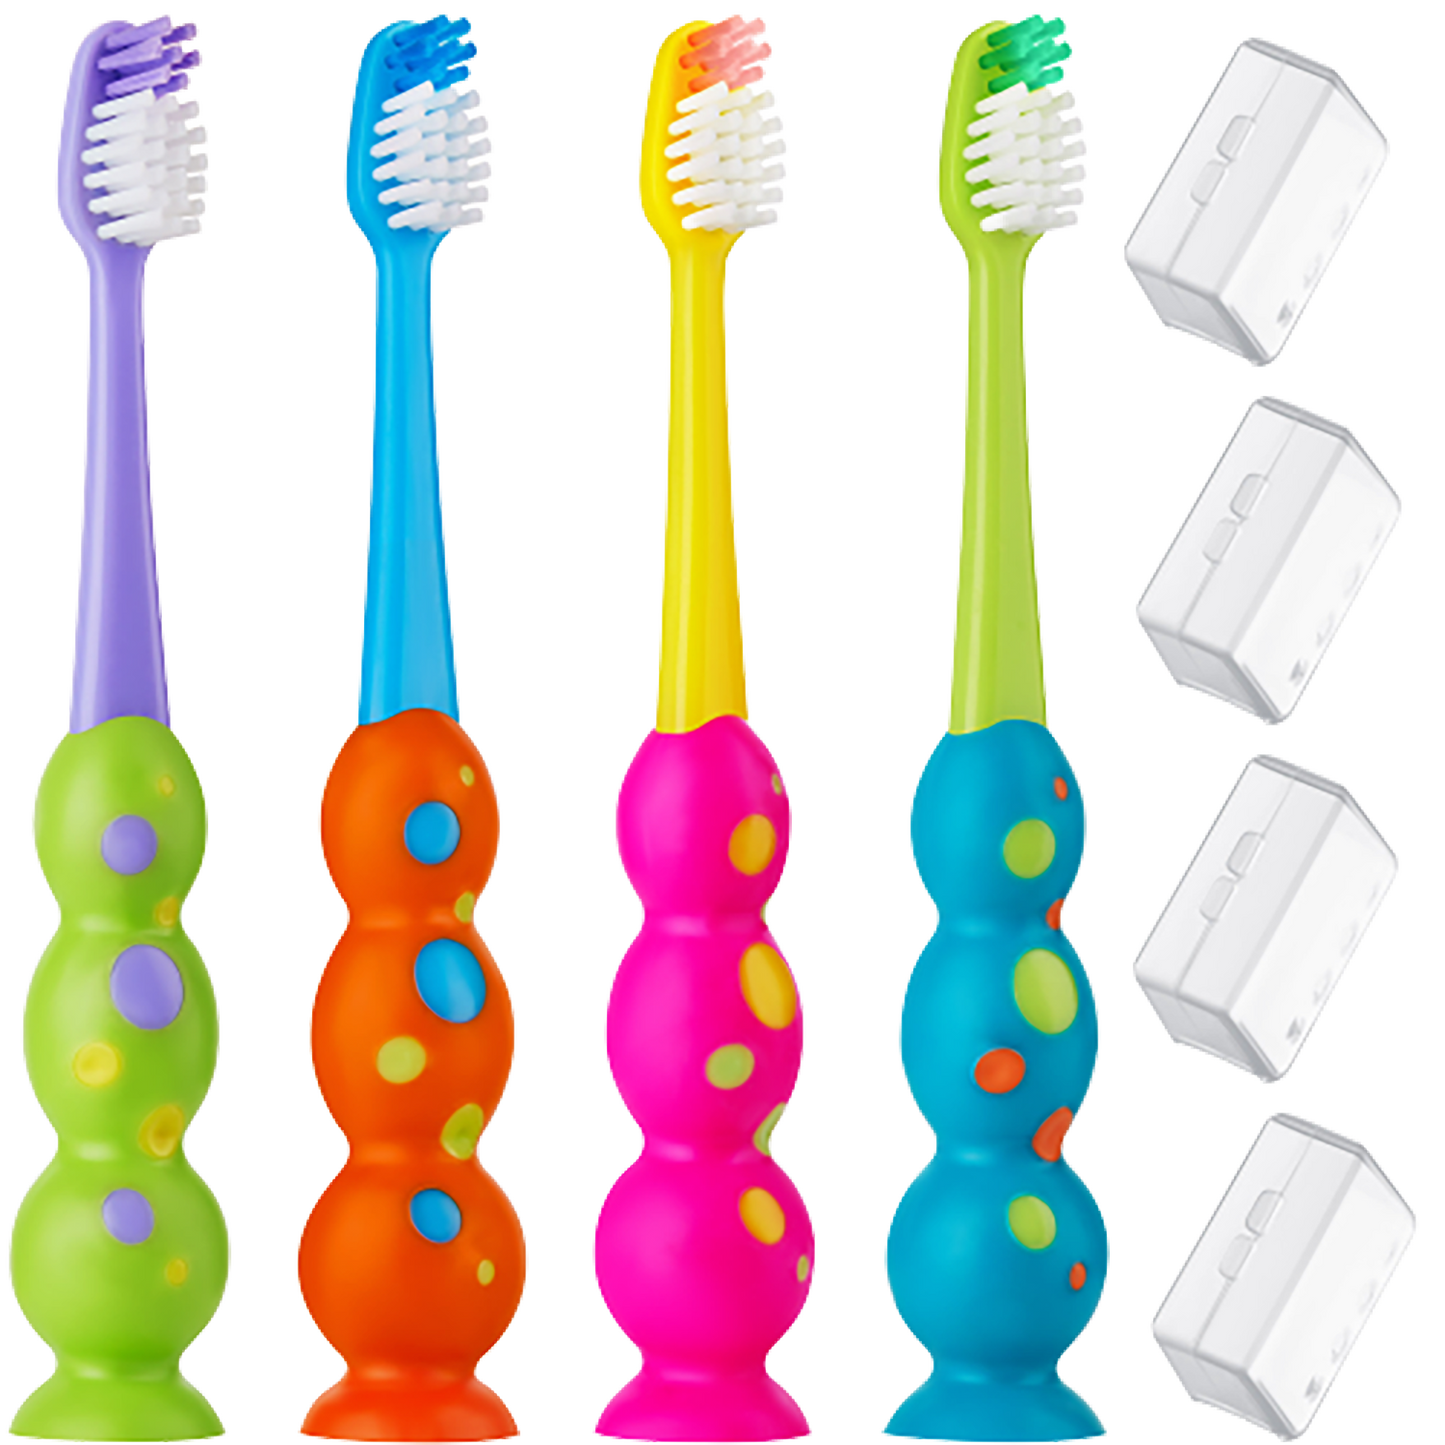 kids toothbrush holder